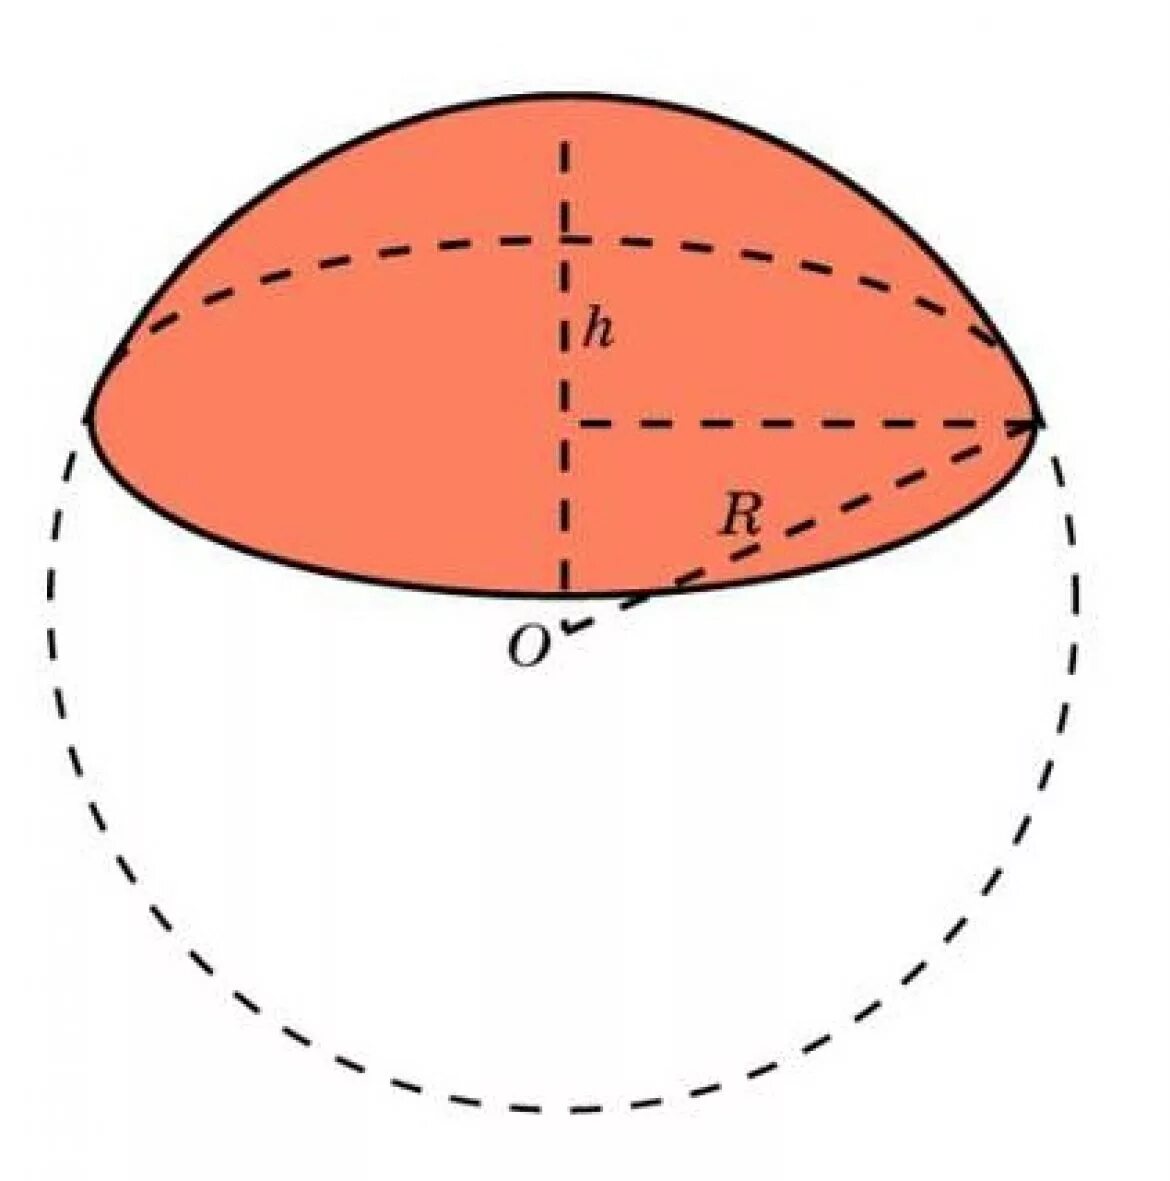 Площадь поверхности шарового сегмента. Площадь поверхности сферического сегмента. Площадь поверхности шарового сектора. Площадь сферической поверхности шарового сегмента.